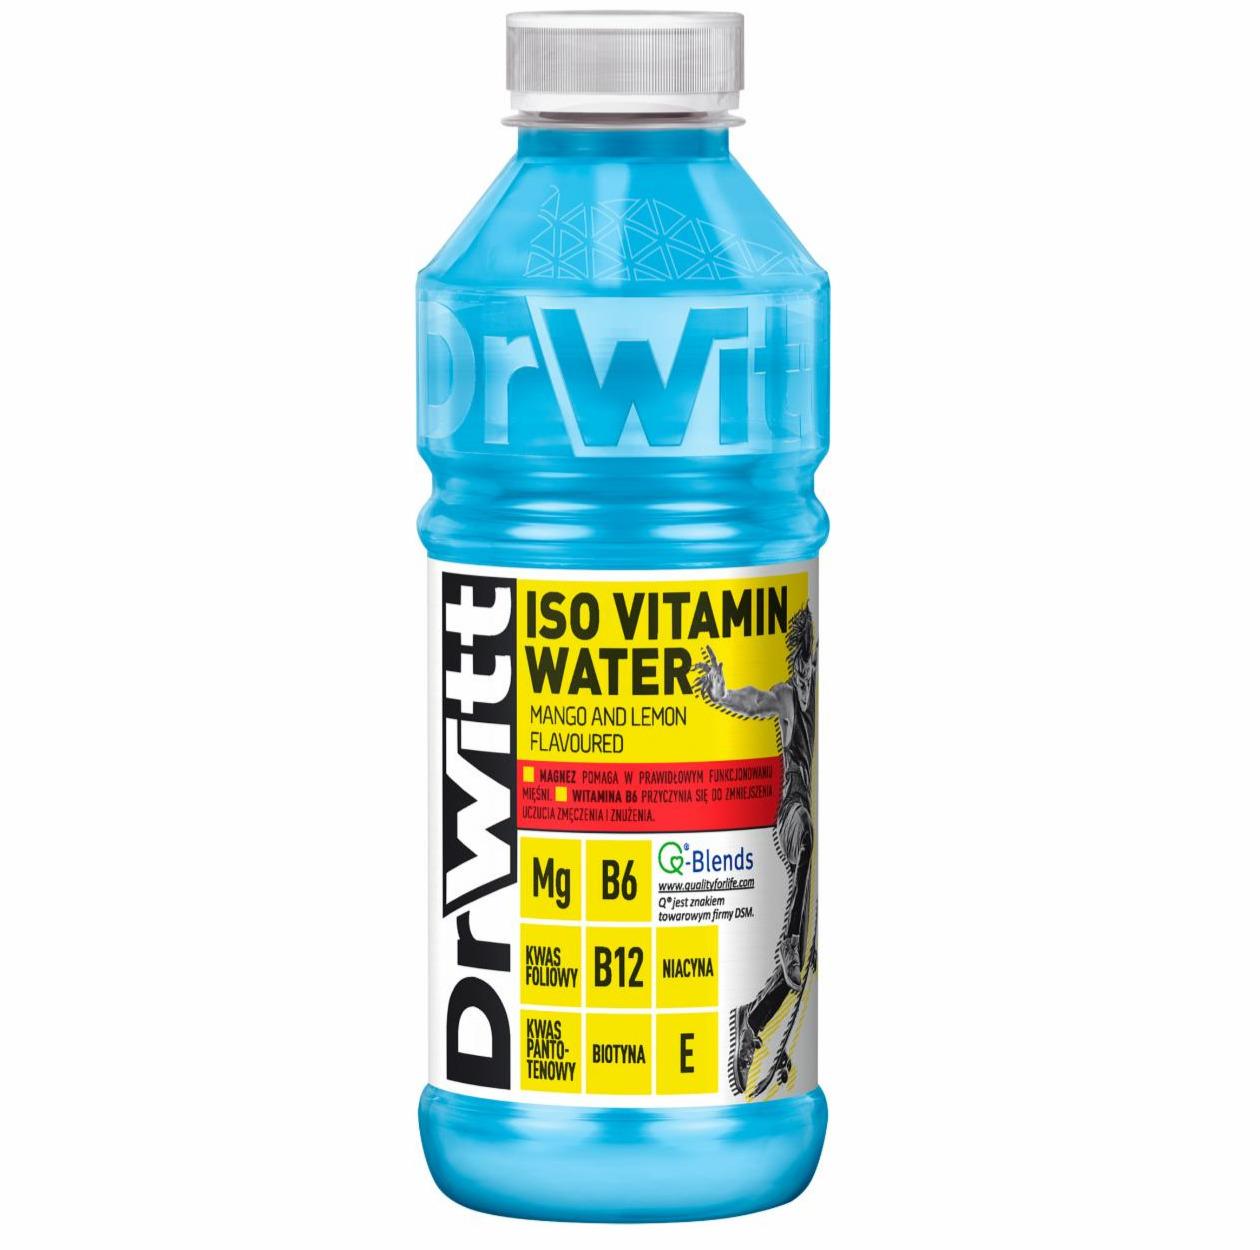 Fotografie - Iso Vitamin Water o smaku mango i cytryny DrWitt